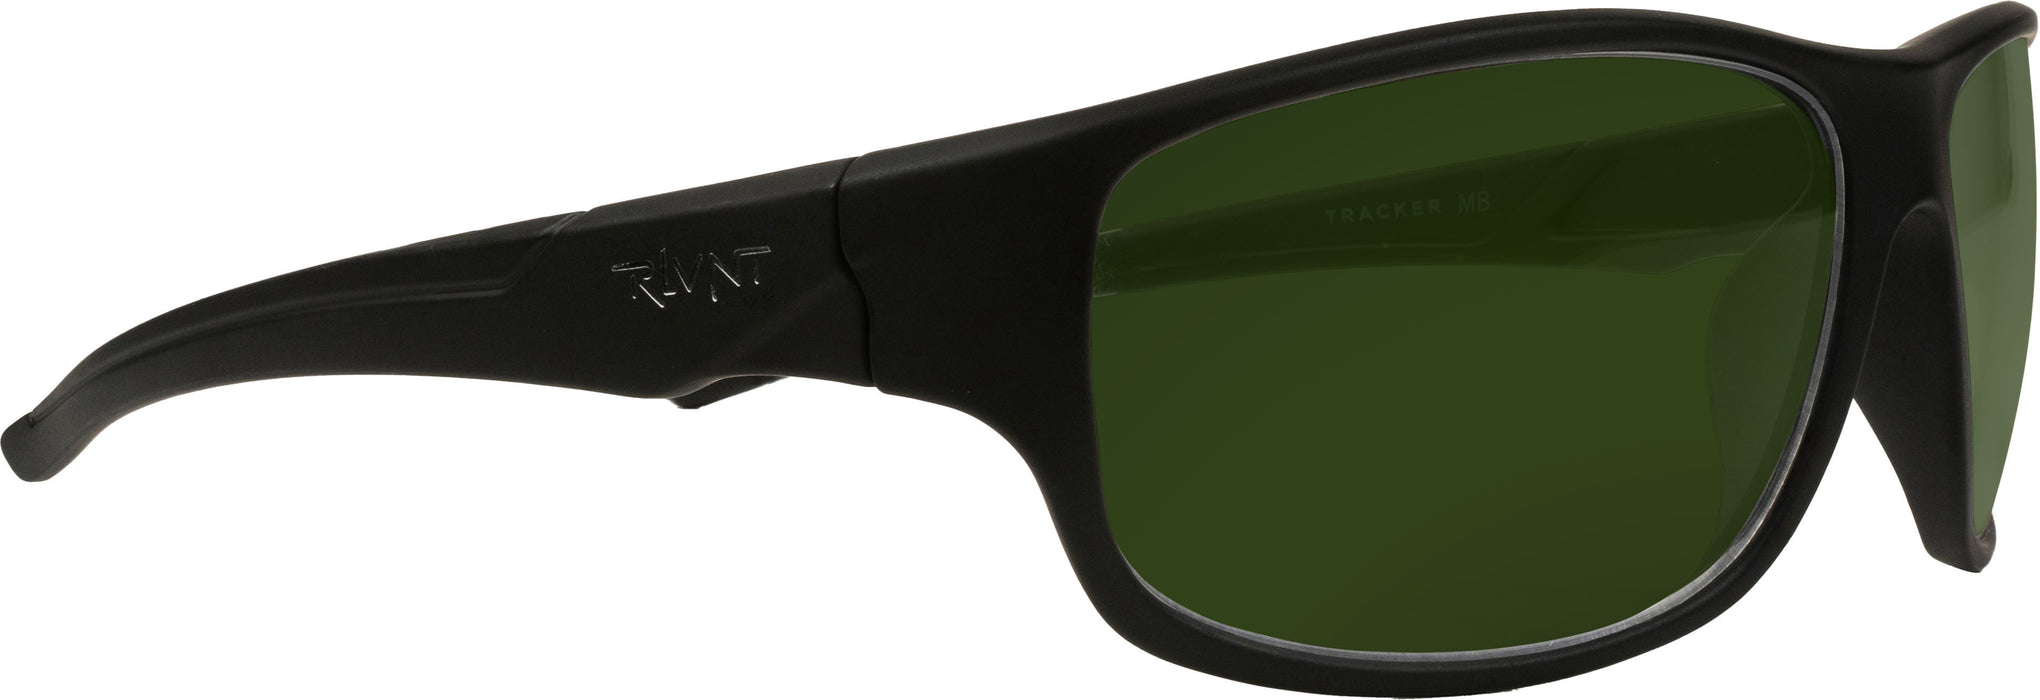 RLVNT Tracker Series Sunglasses